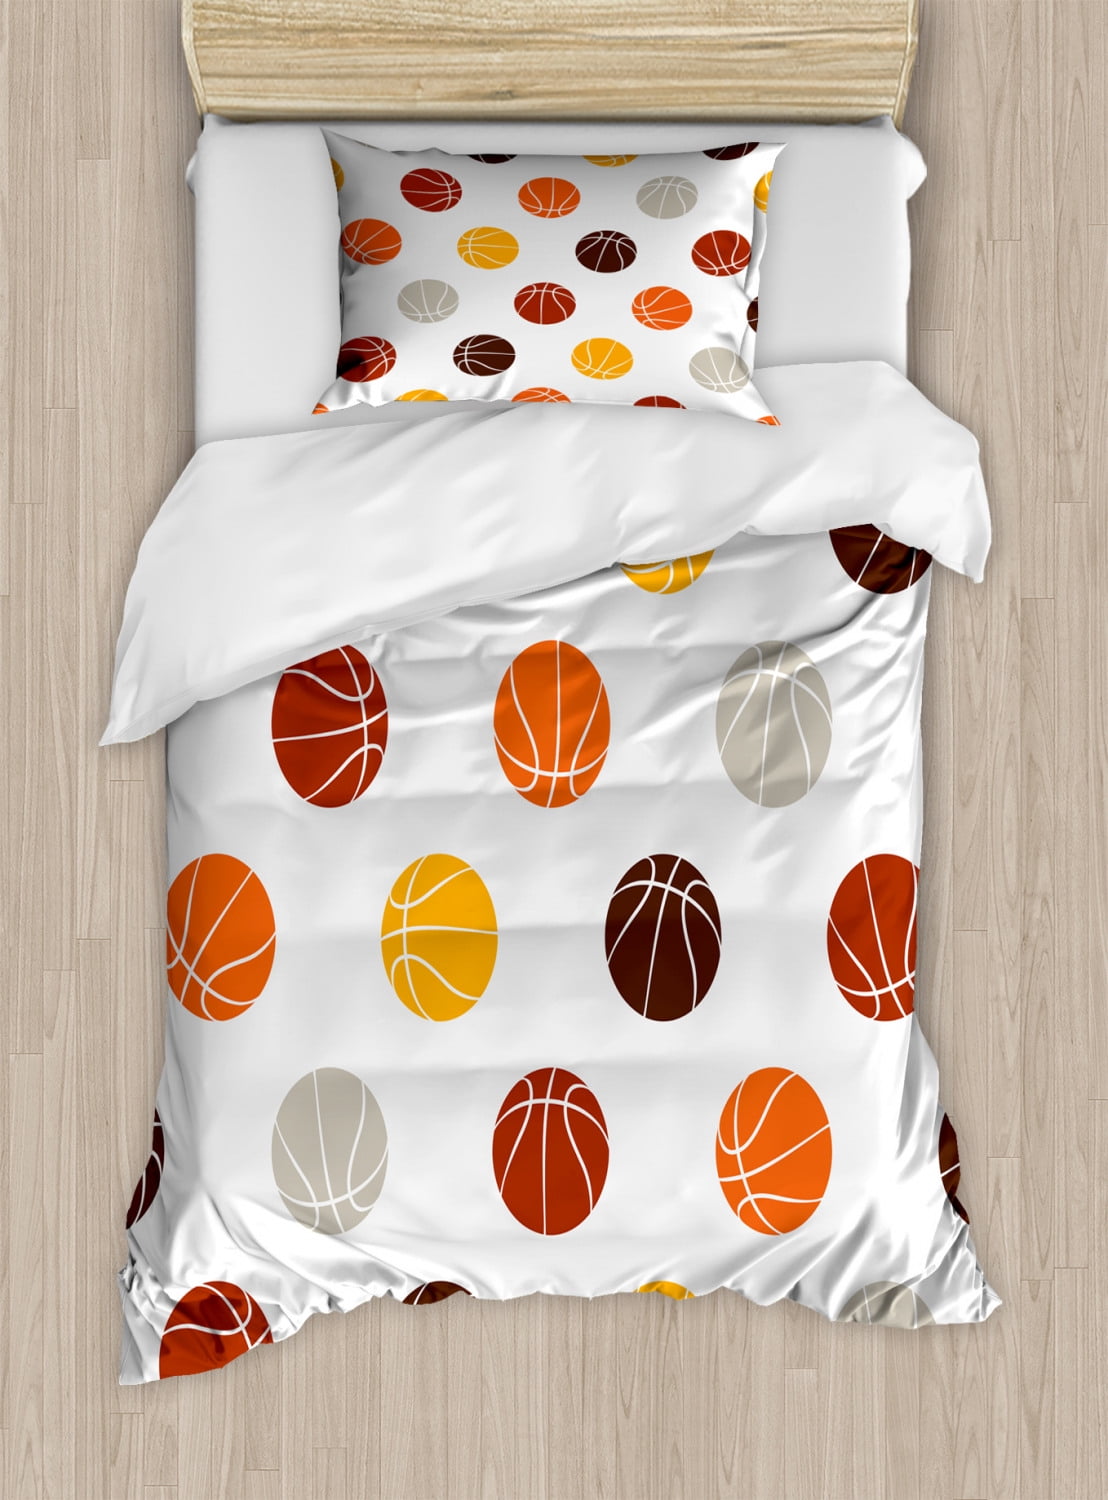 Basketball Duvet Cover Set Twin Size, Ball Pattern in Earthen Tones ...